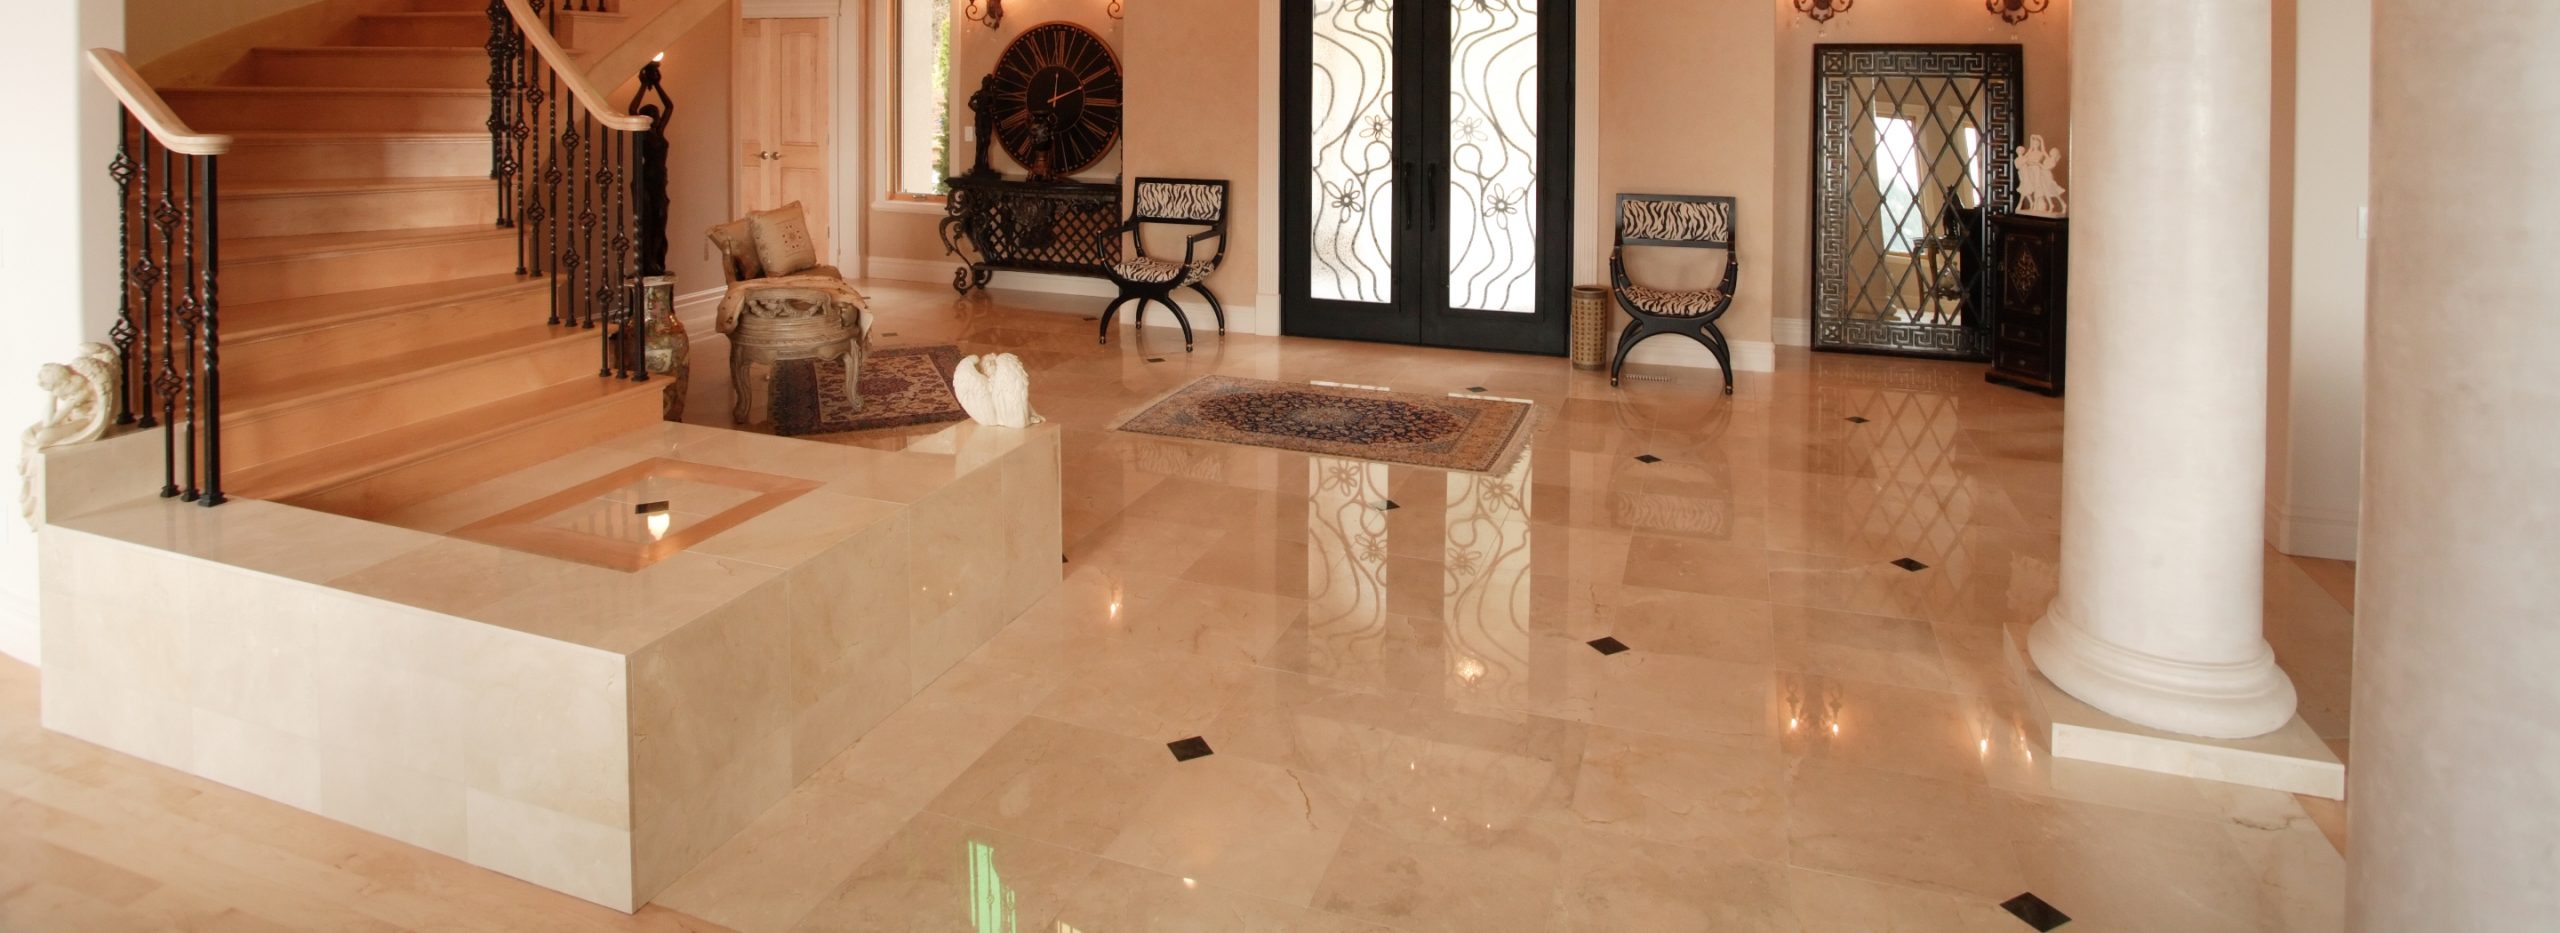 Beautiful polished marble floor